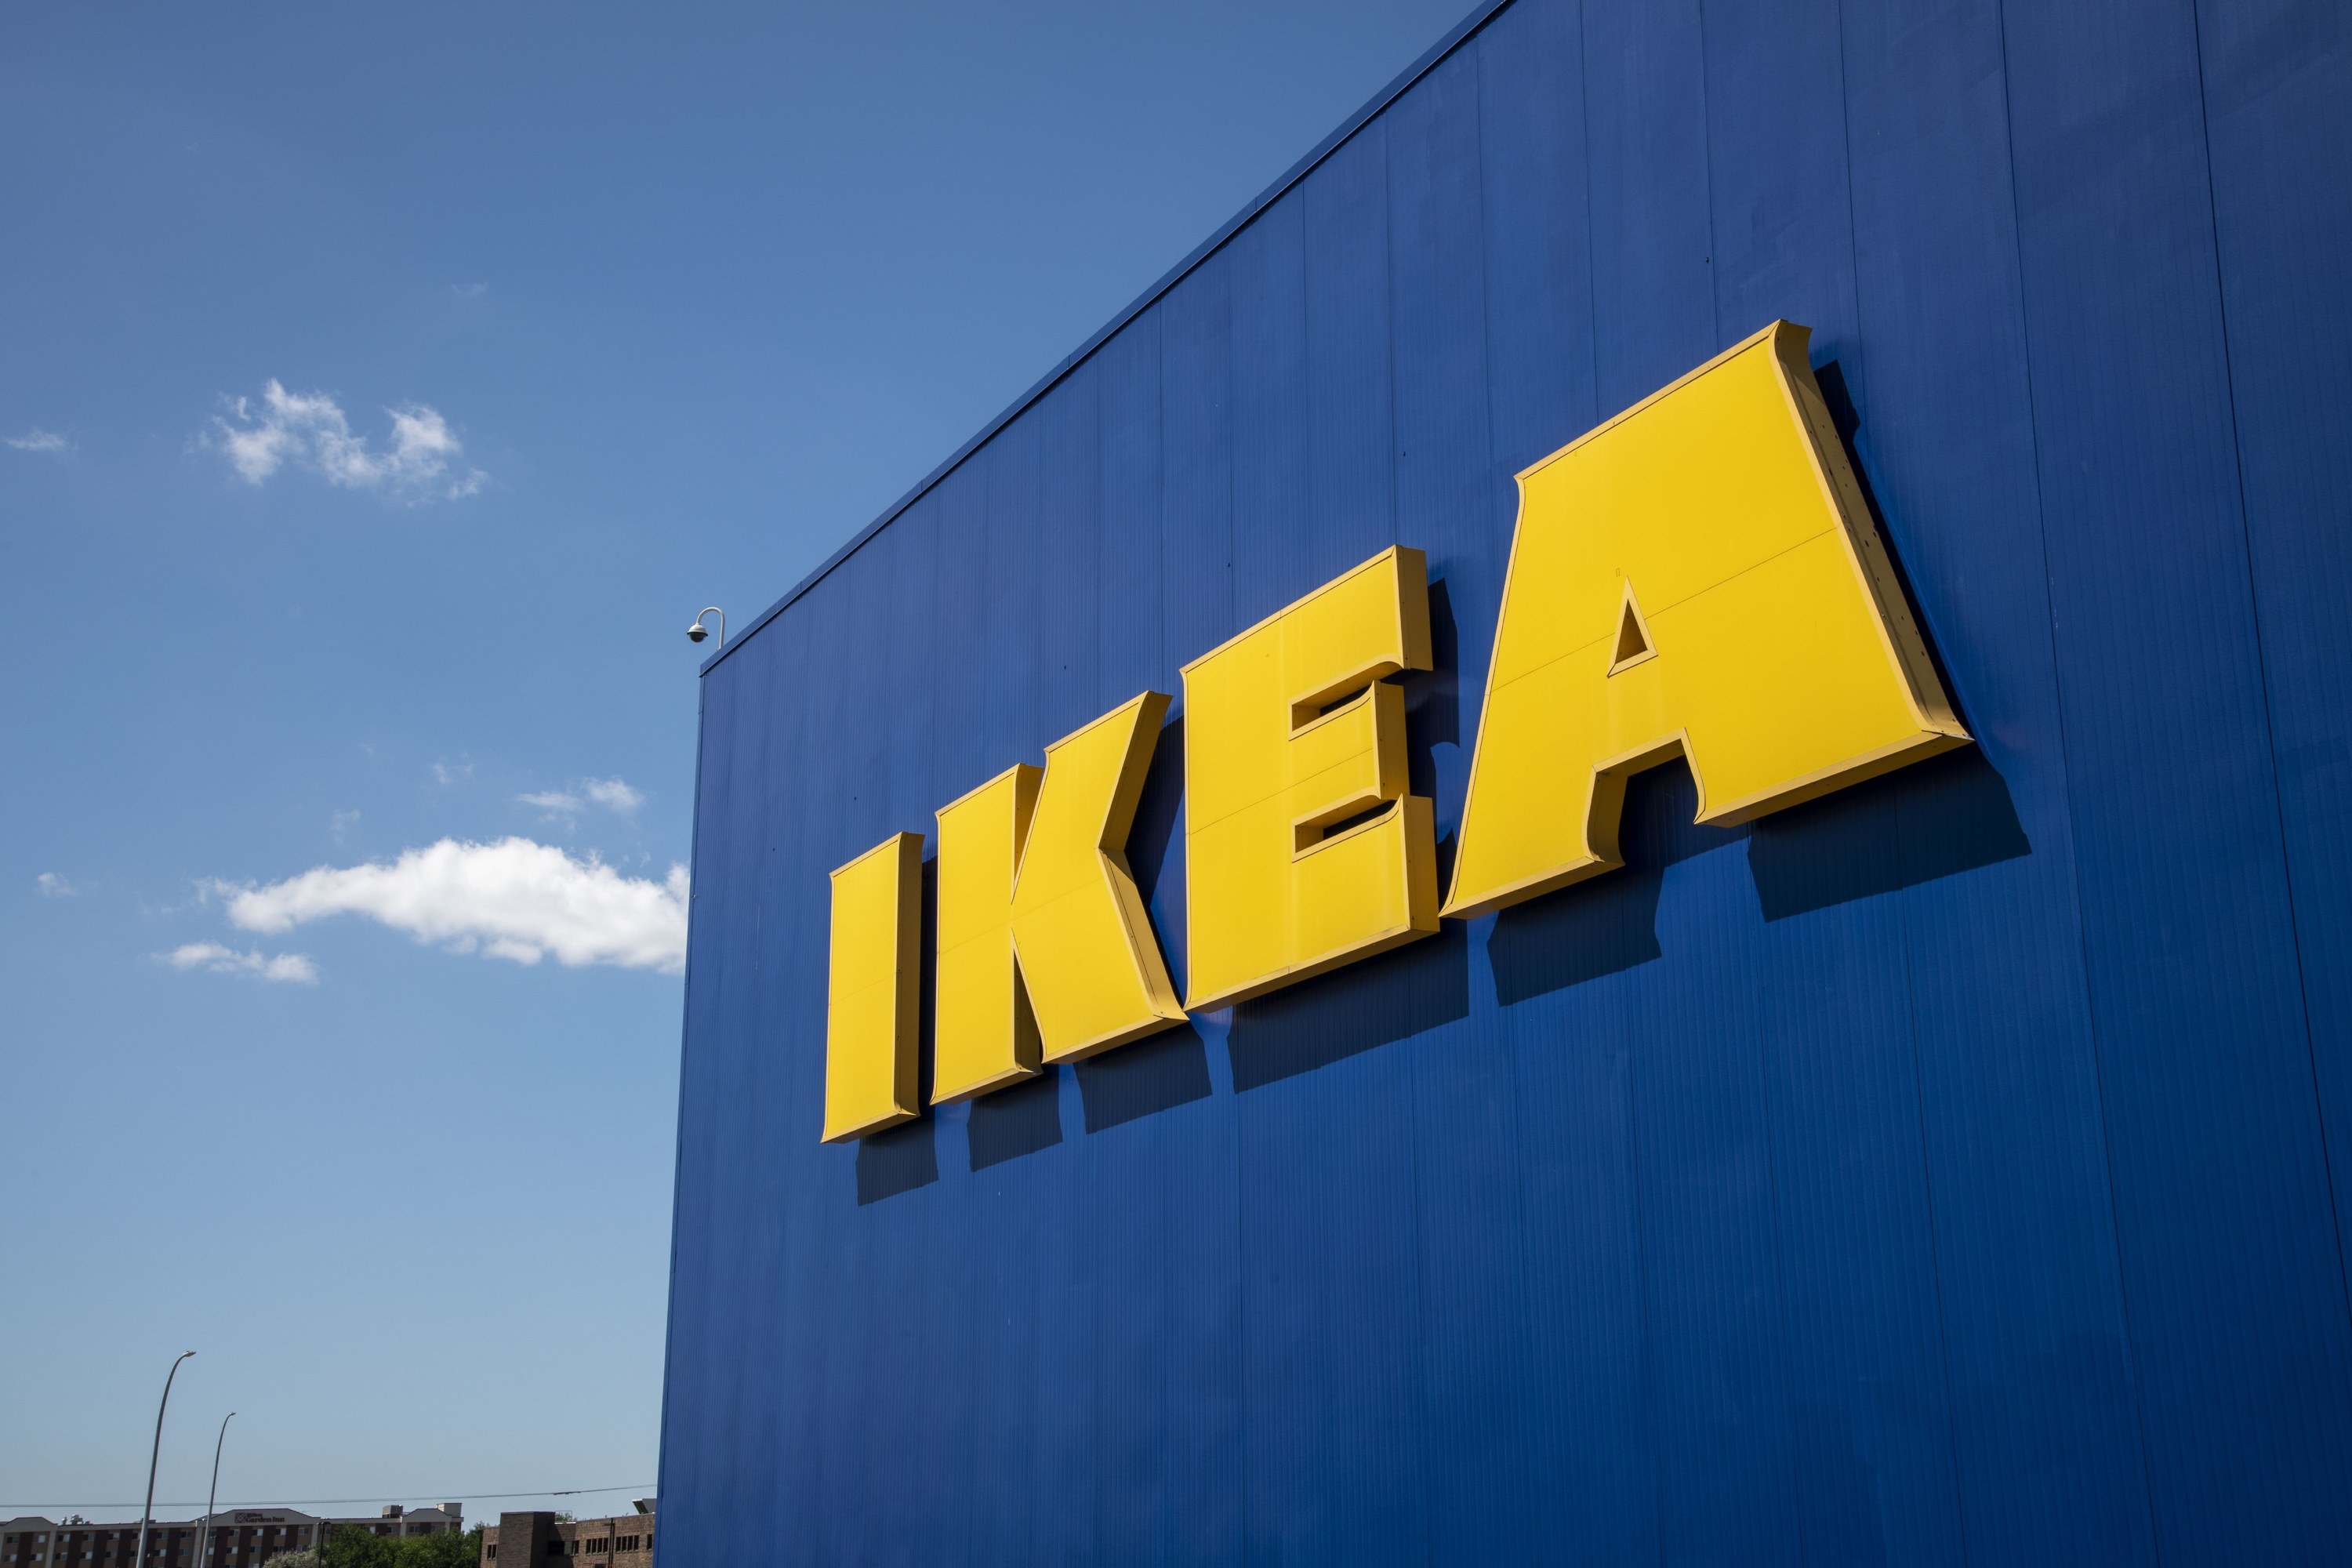 The Ikea logo